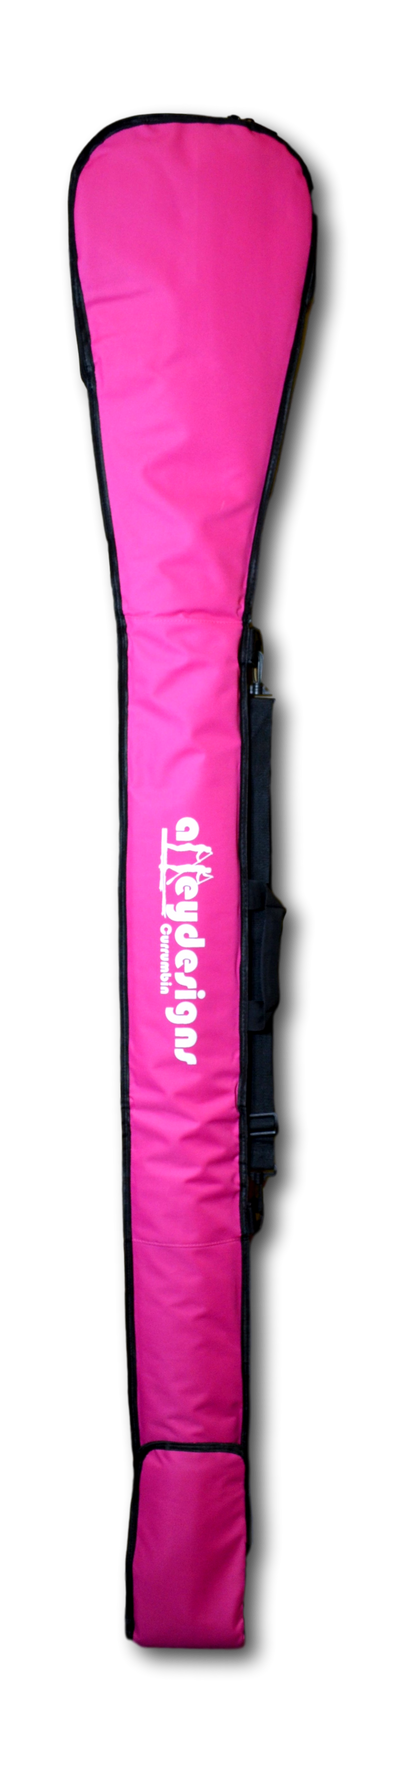 10' x 32" Timber Mint & Pink Turtle Performance SUP Pink Paddle, Bag, Pink Paddle Bag,Leg rope Bundle $1399